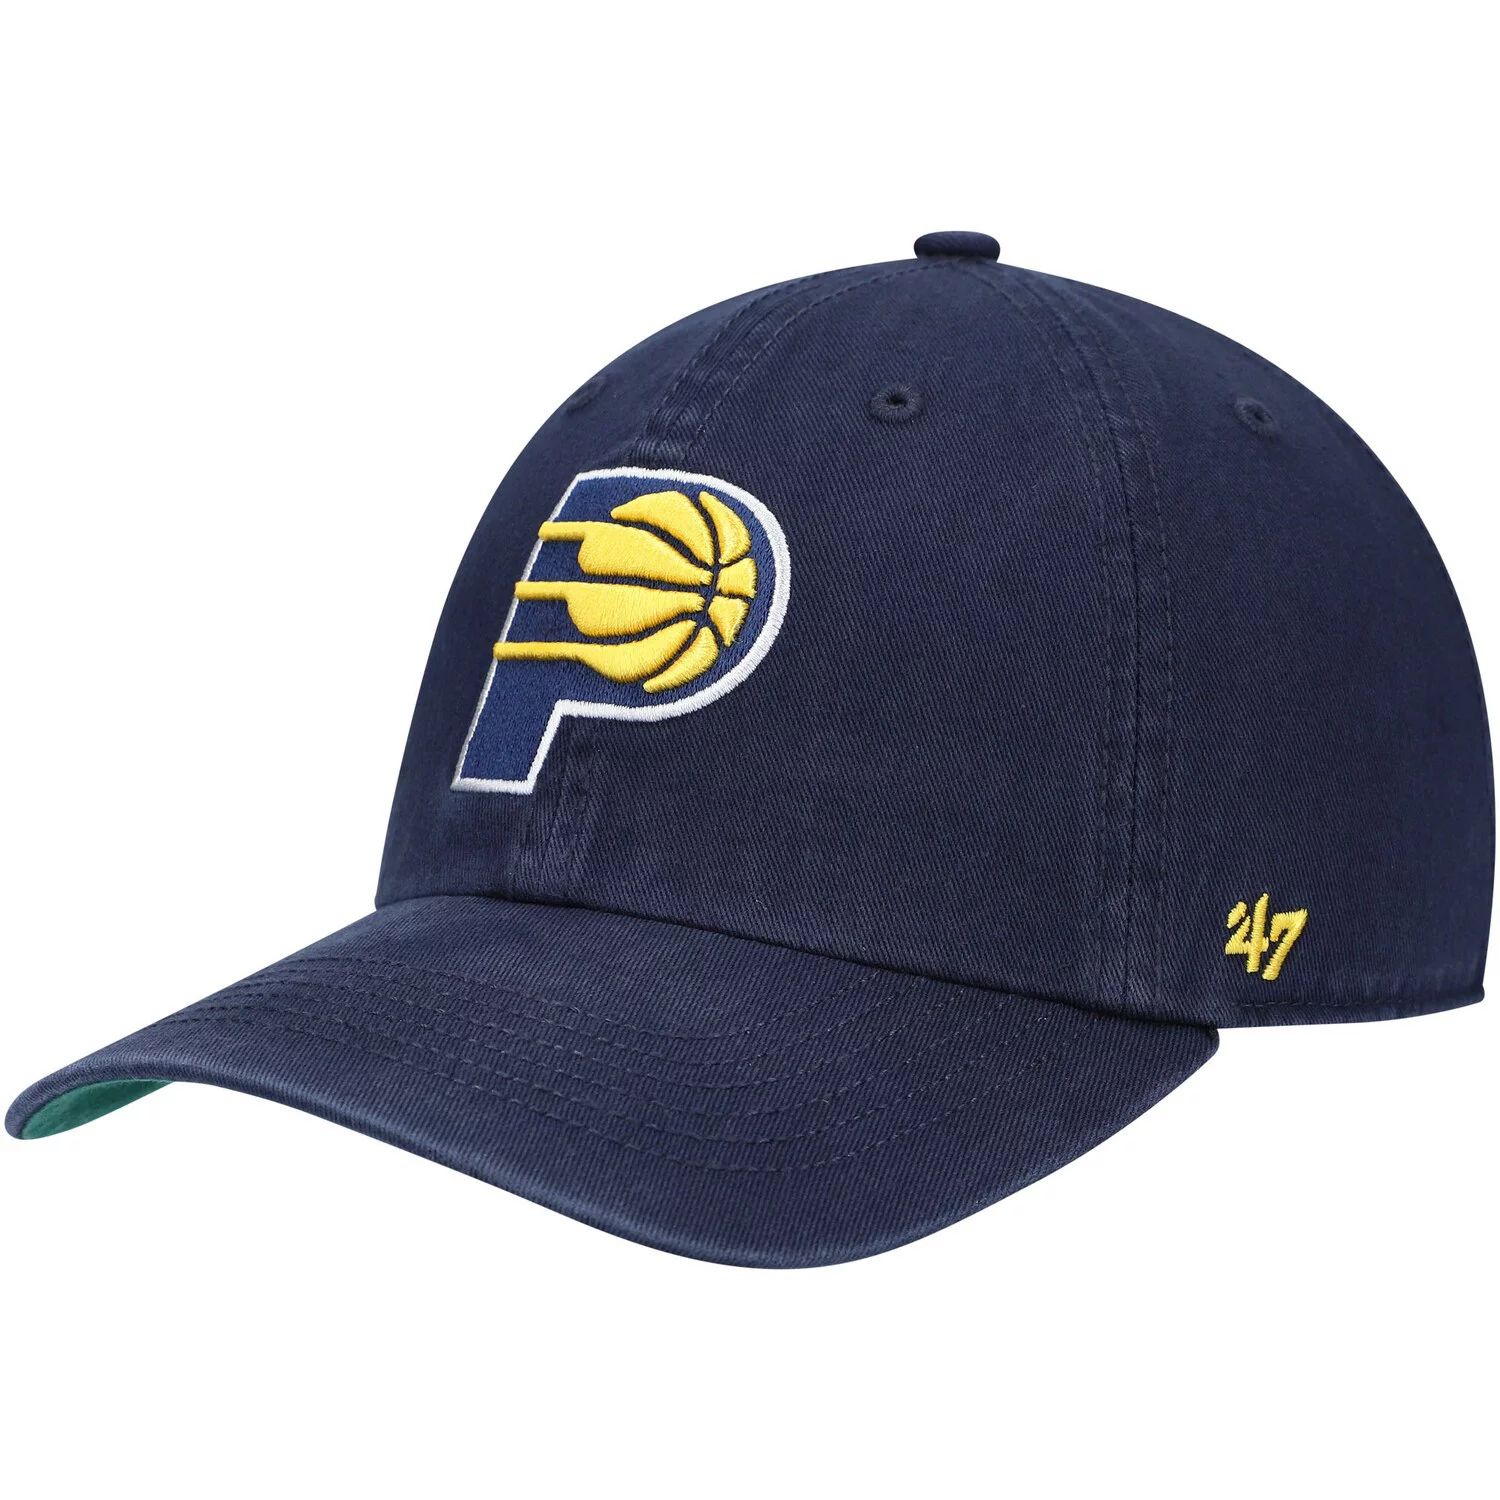 Мужская приталенная шляпа темно-синего цвета '47 Indiana Pacers Team Franchise